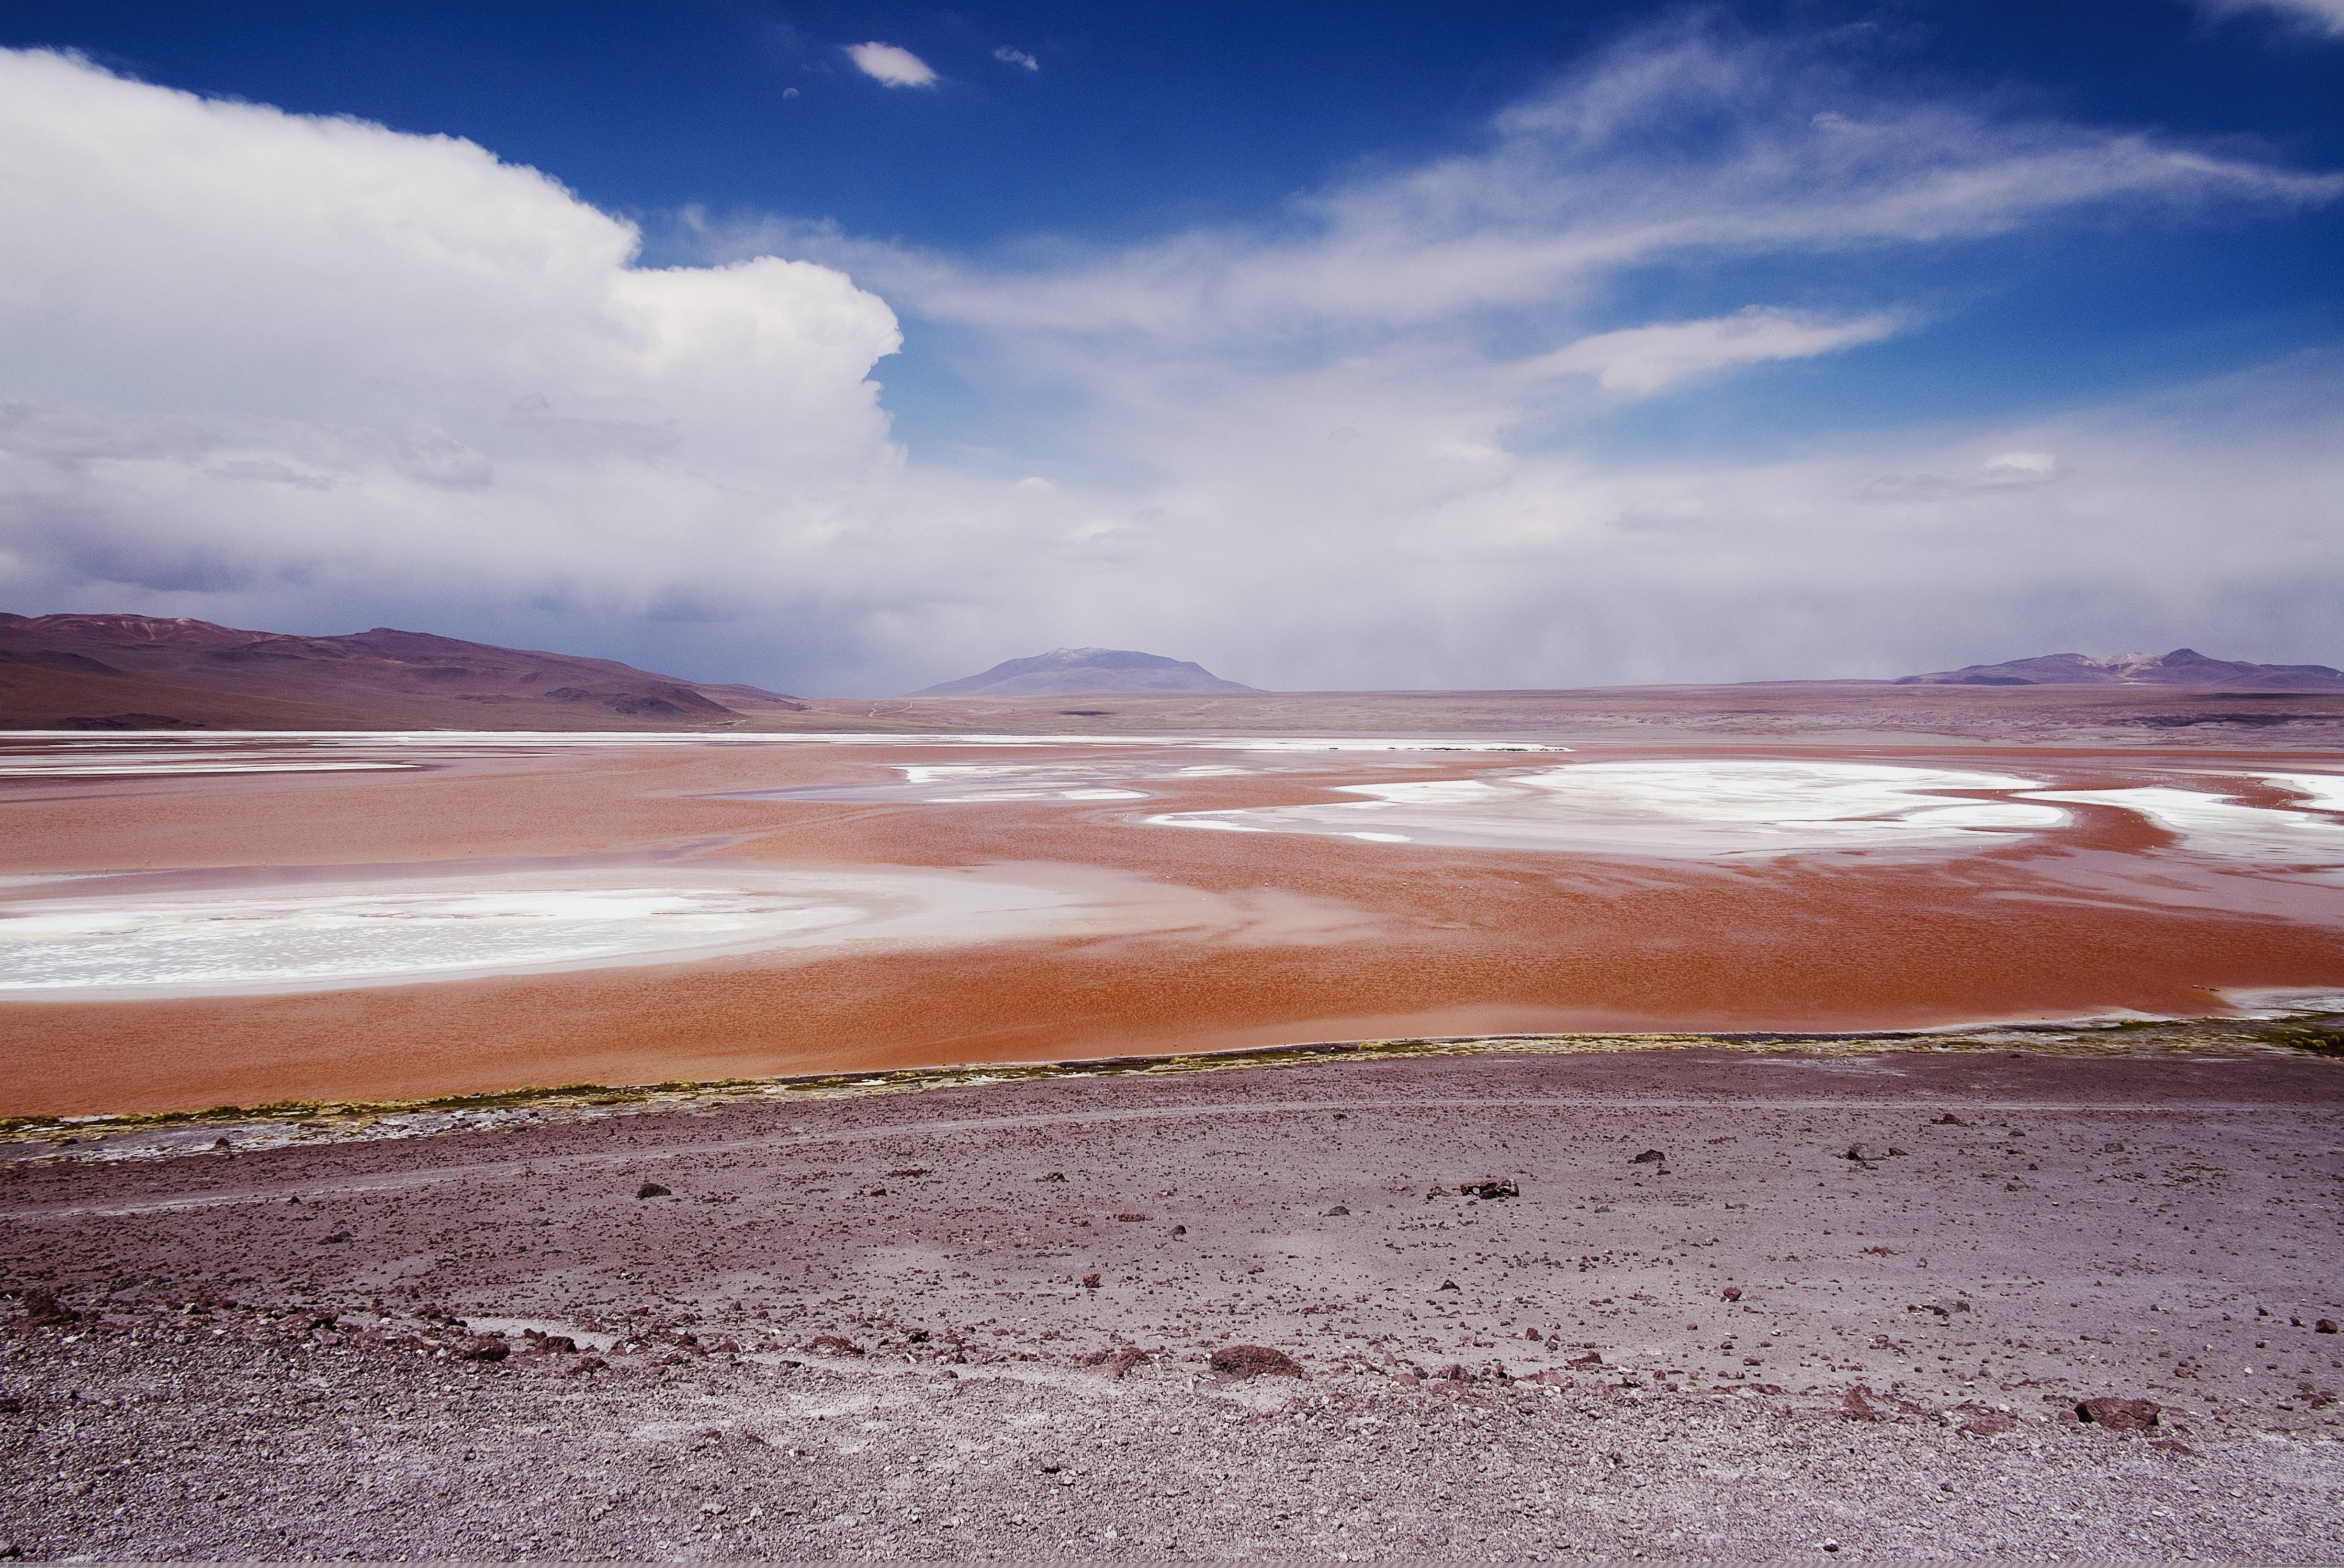 Porn Salt Flats - Pic. #South #Lago #Bolivia #Colorado, 2668290B â€“ My r/EARTHPORN favs